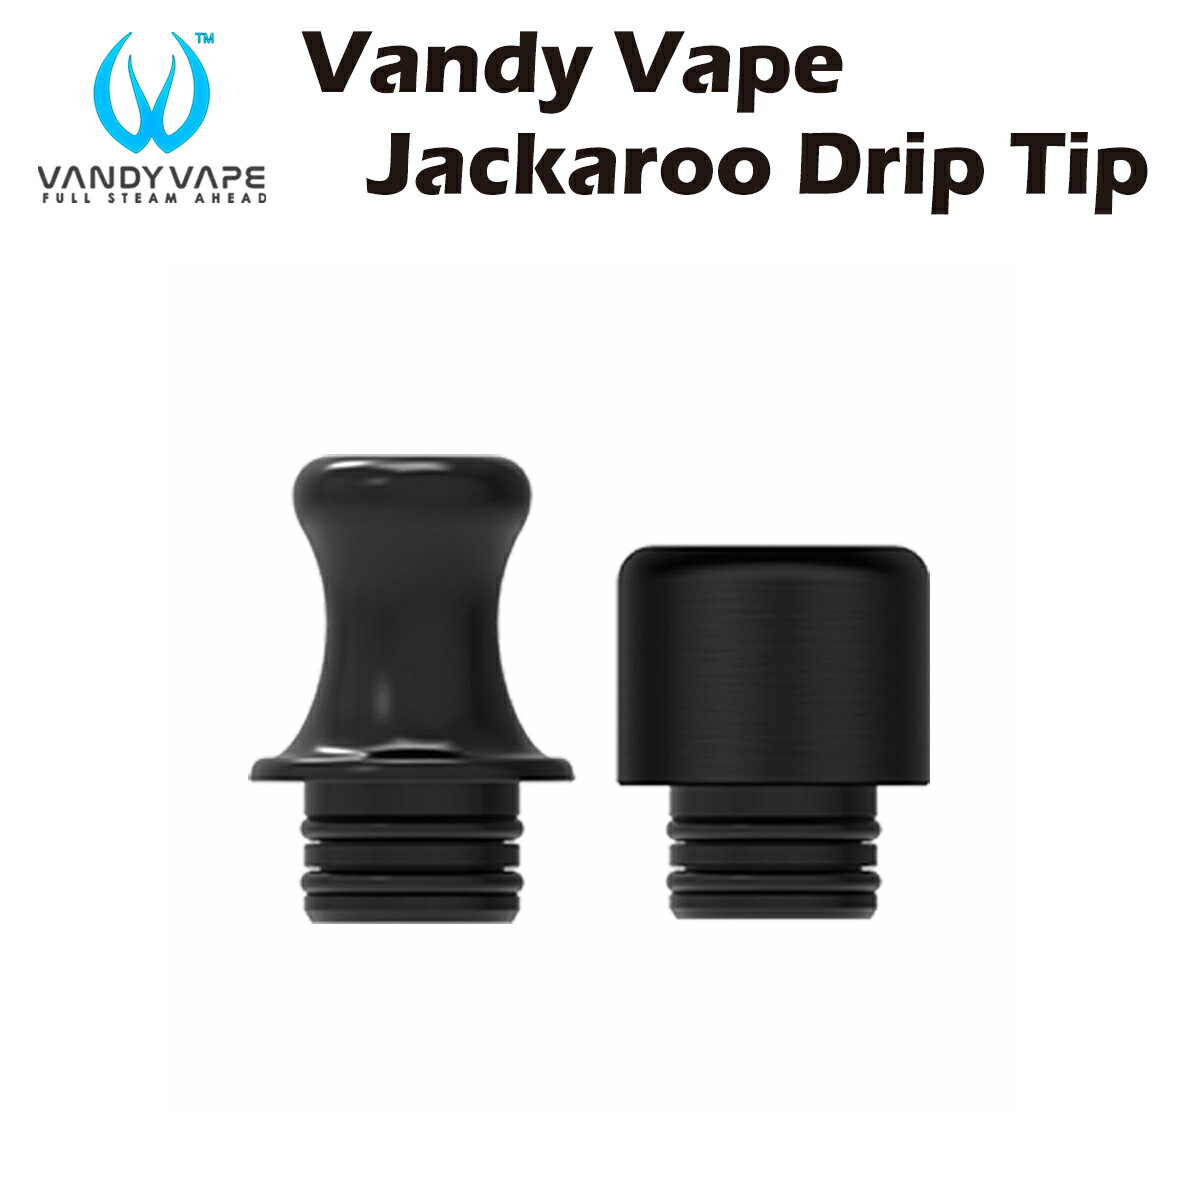 VandyVape Jackaroo 510 純正ドリップチップ MTL / DL バンディベイプ ジャッカル 電子タバコ 電子たばこ ベイプ vandy